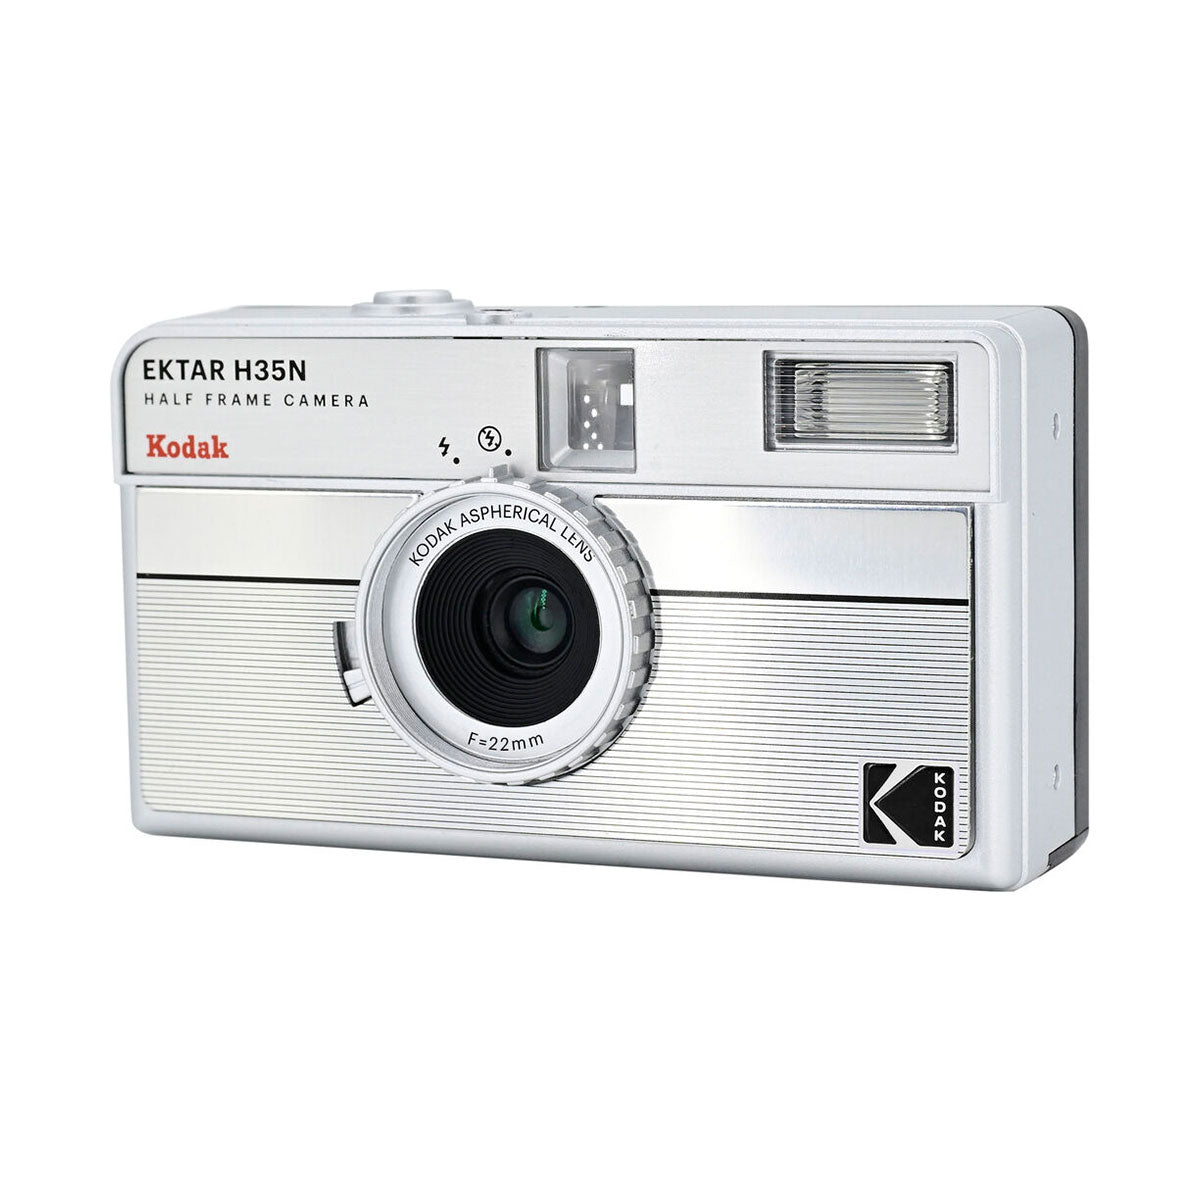 Kodak H35N 1/2 Frame Film Camera - Silver